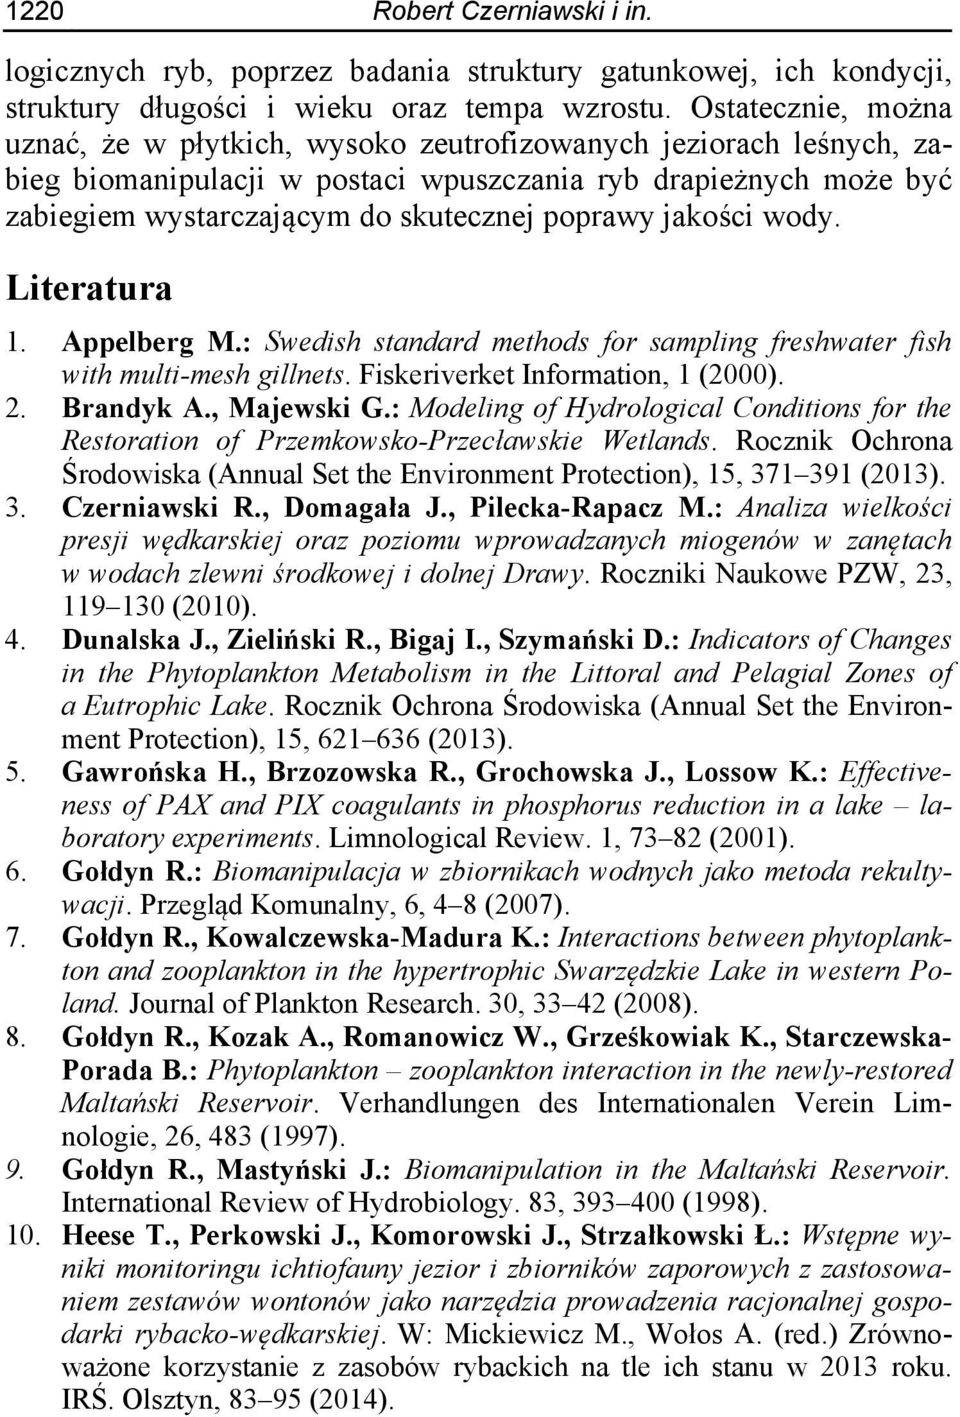 jakości wody. Literatura 1. Appelberg M.: Swedish standard methods for sampling freshwater fish with multi-mesh gillnets. Fiskeriverket Information, 1 (2000). 2. Brandyk A., Majewski G.